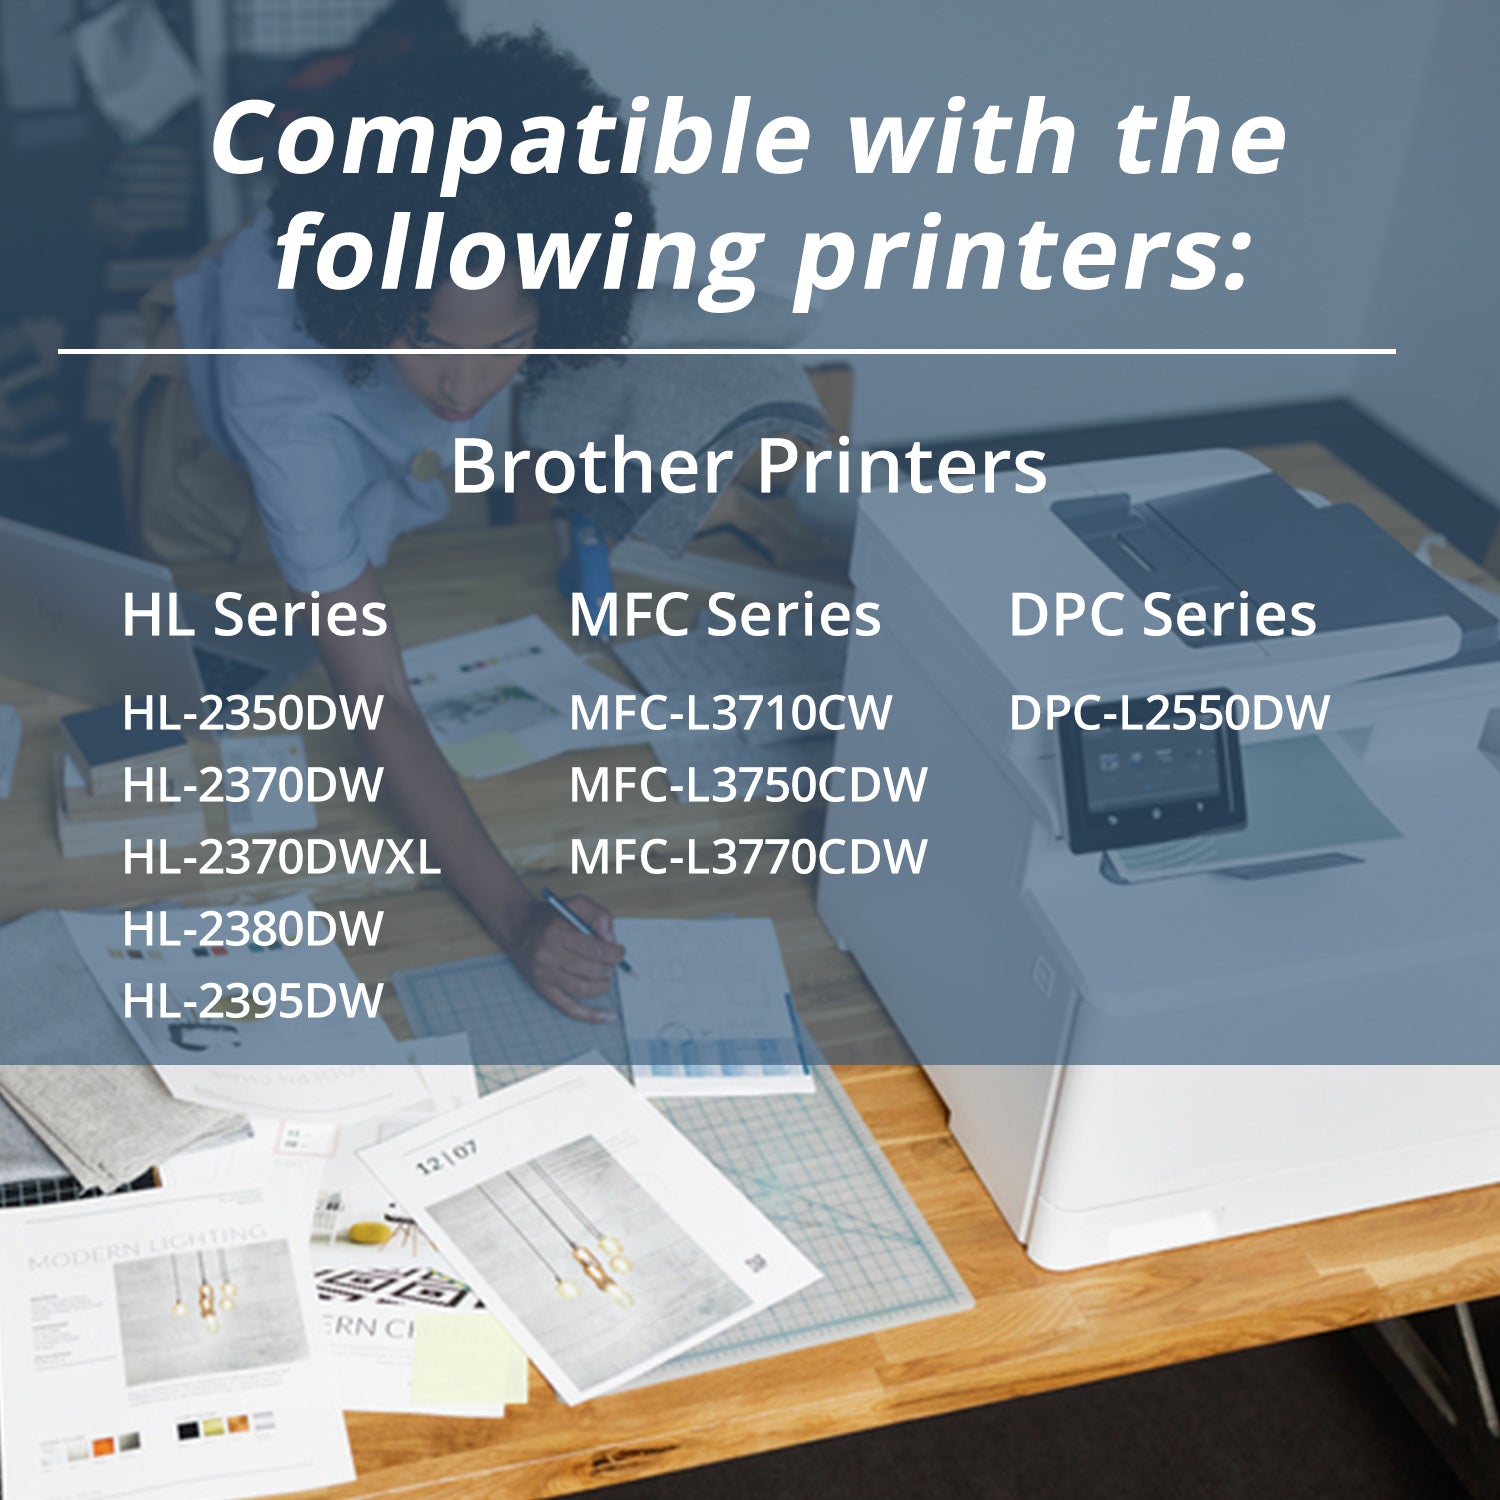 Brother Toner Cartridges - MFC Series